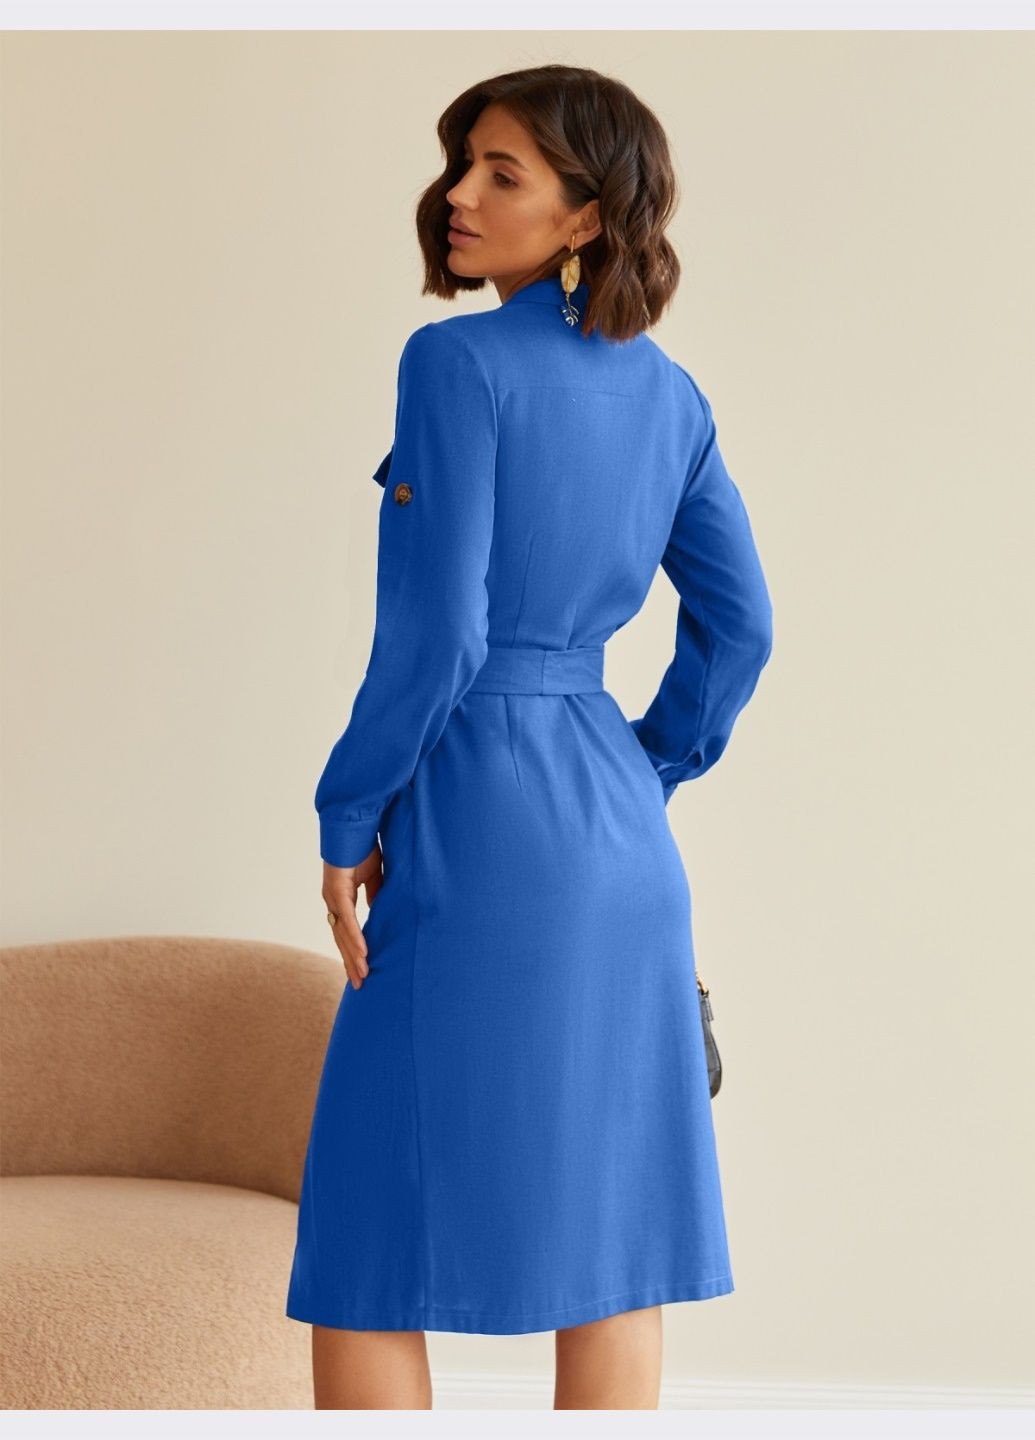 Синя лляна сукня-сорочка синього кольору з шльовками на рукавах Dressa